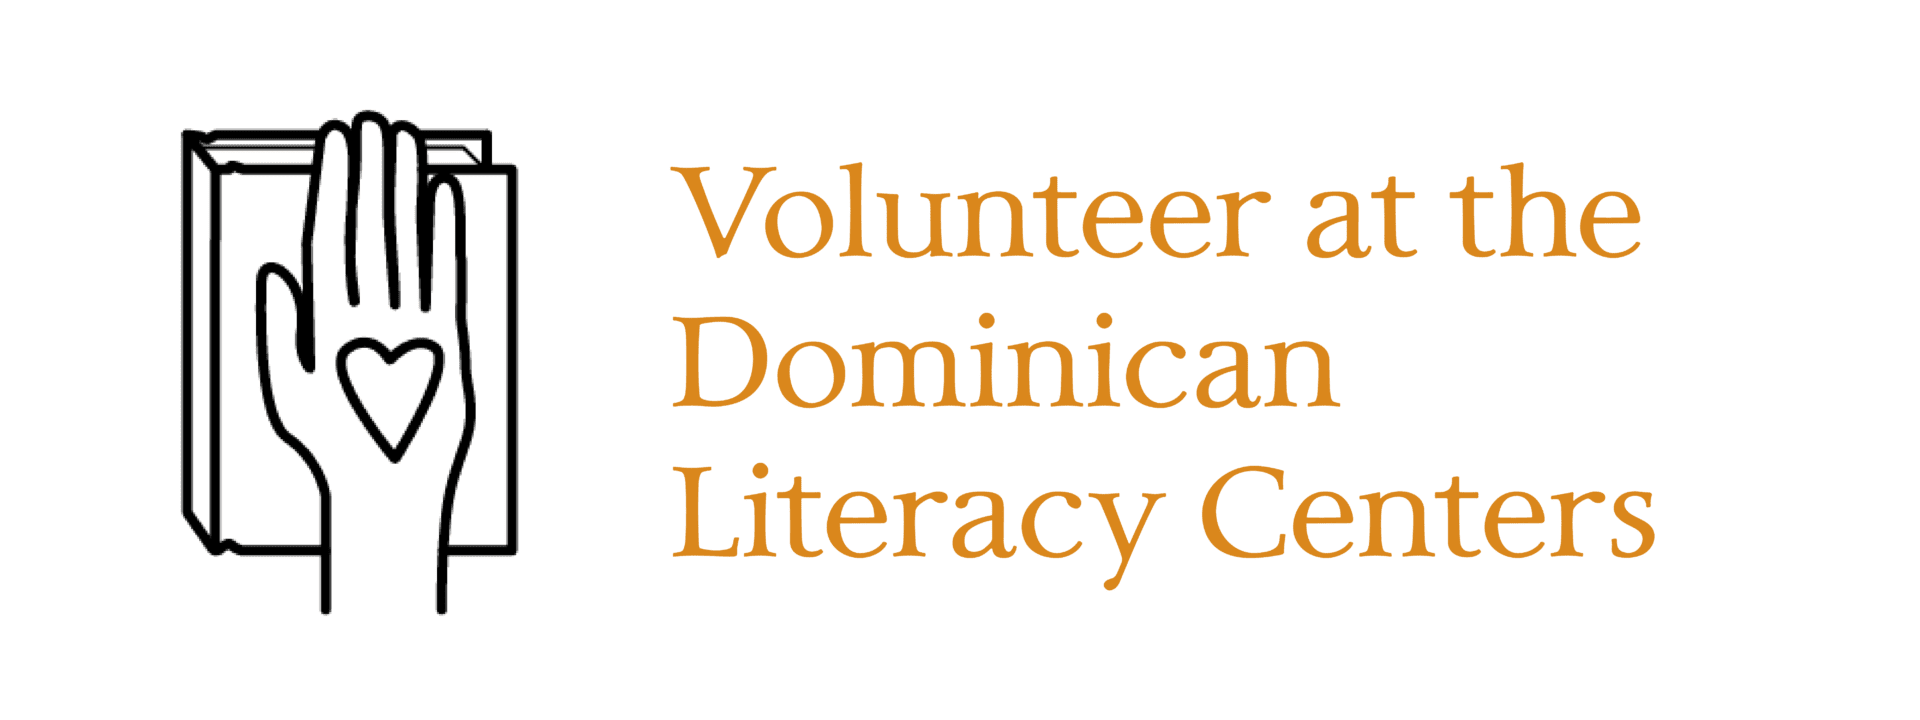 VolunteerAtTheDominicanLiteracyCenters-01